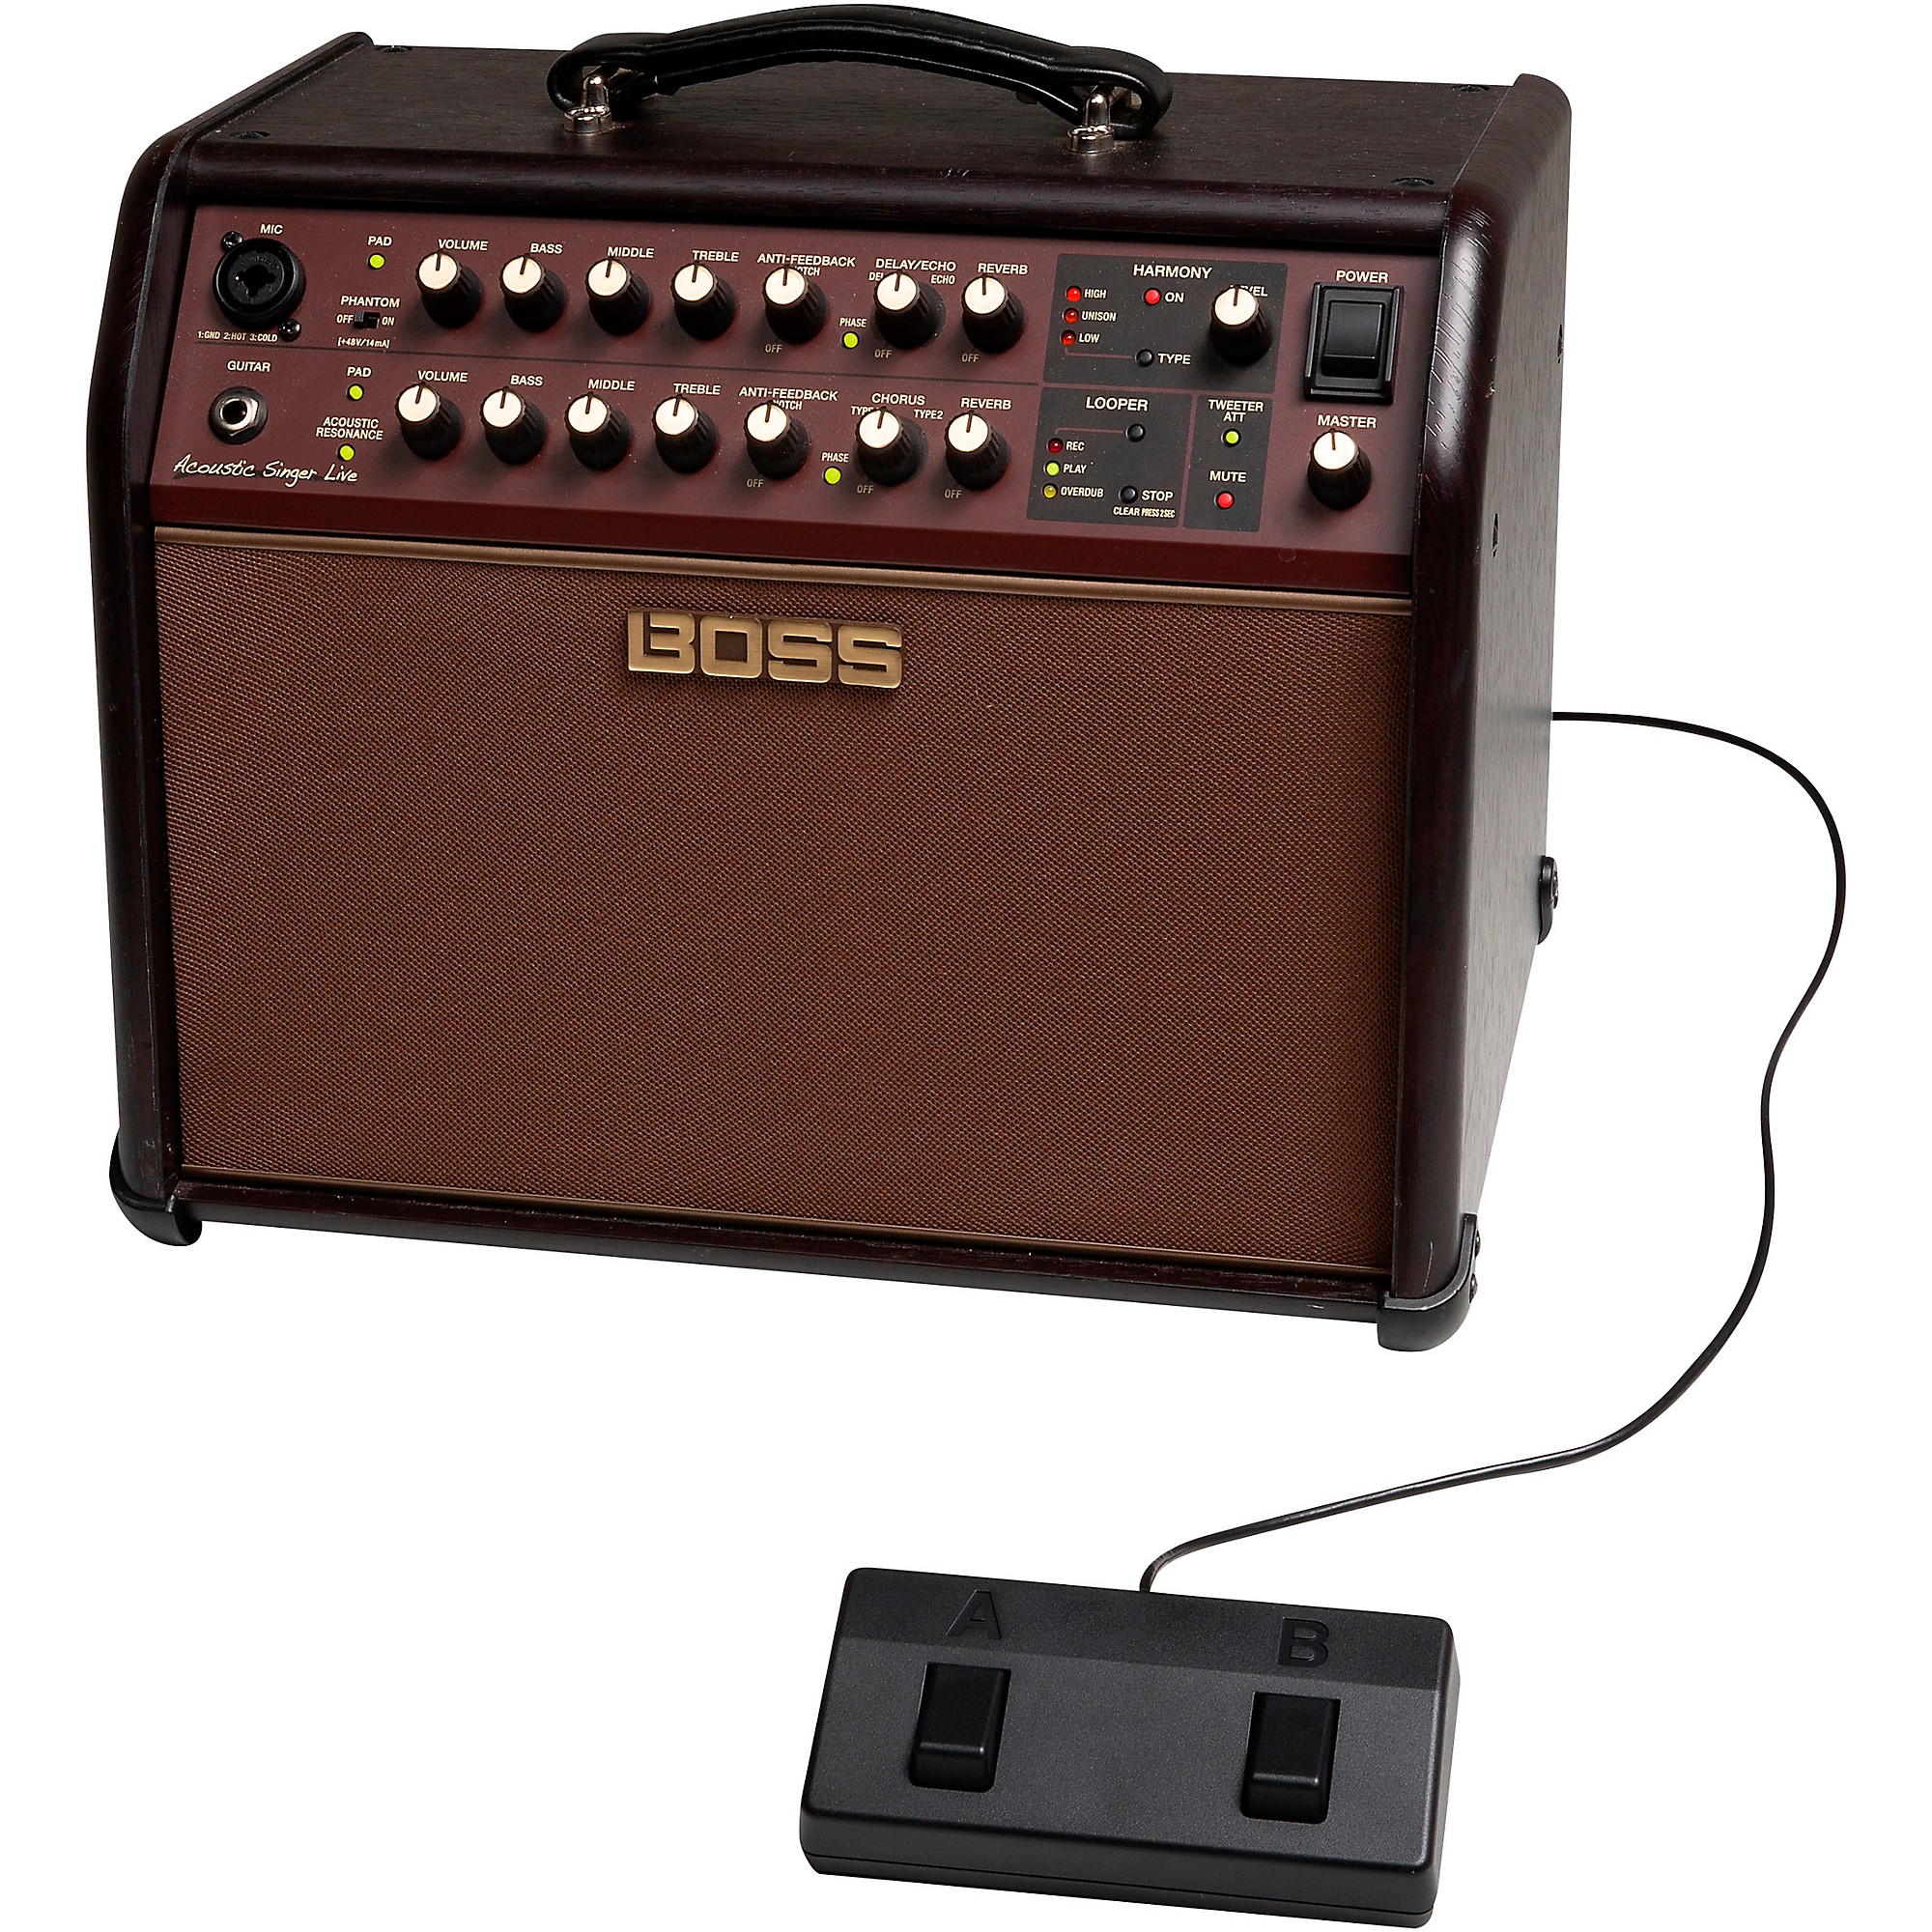 BOSS Acoustic Singer Live LT 60W Bi-Amp Acoustic Guitar Amplifier with  Analog Input and 3-Band EQ - BossACS-LIVELT